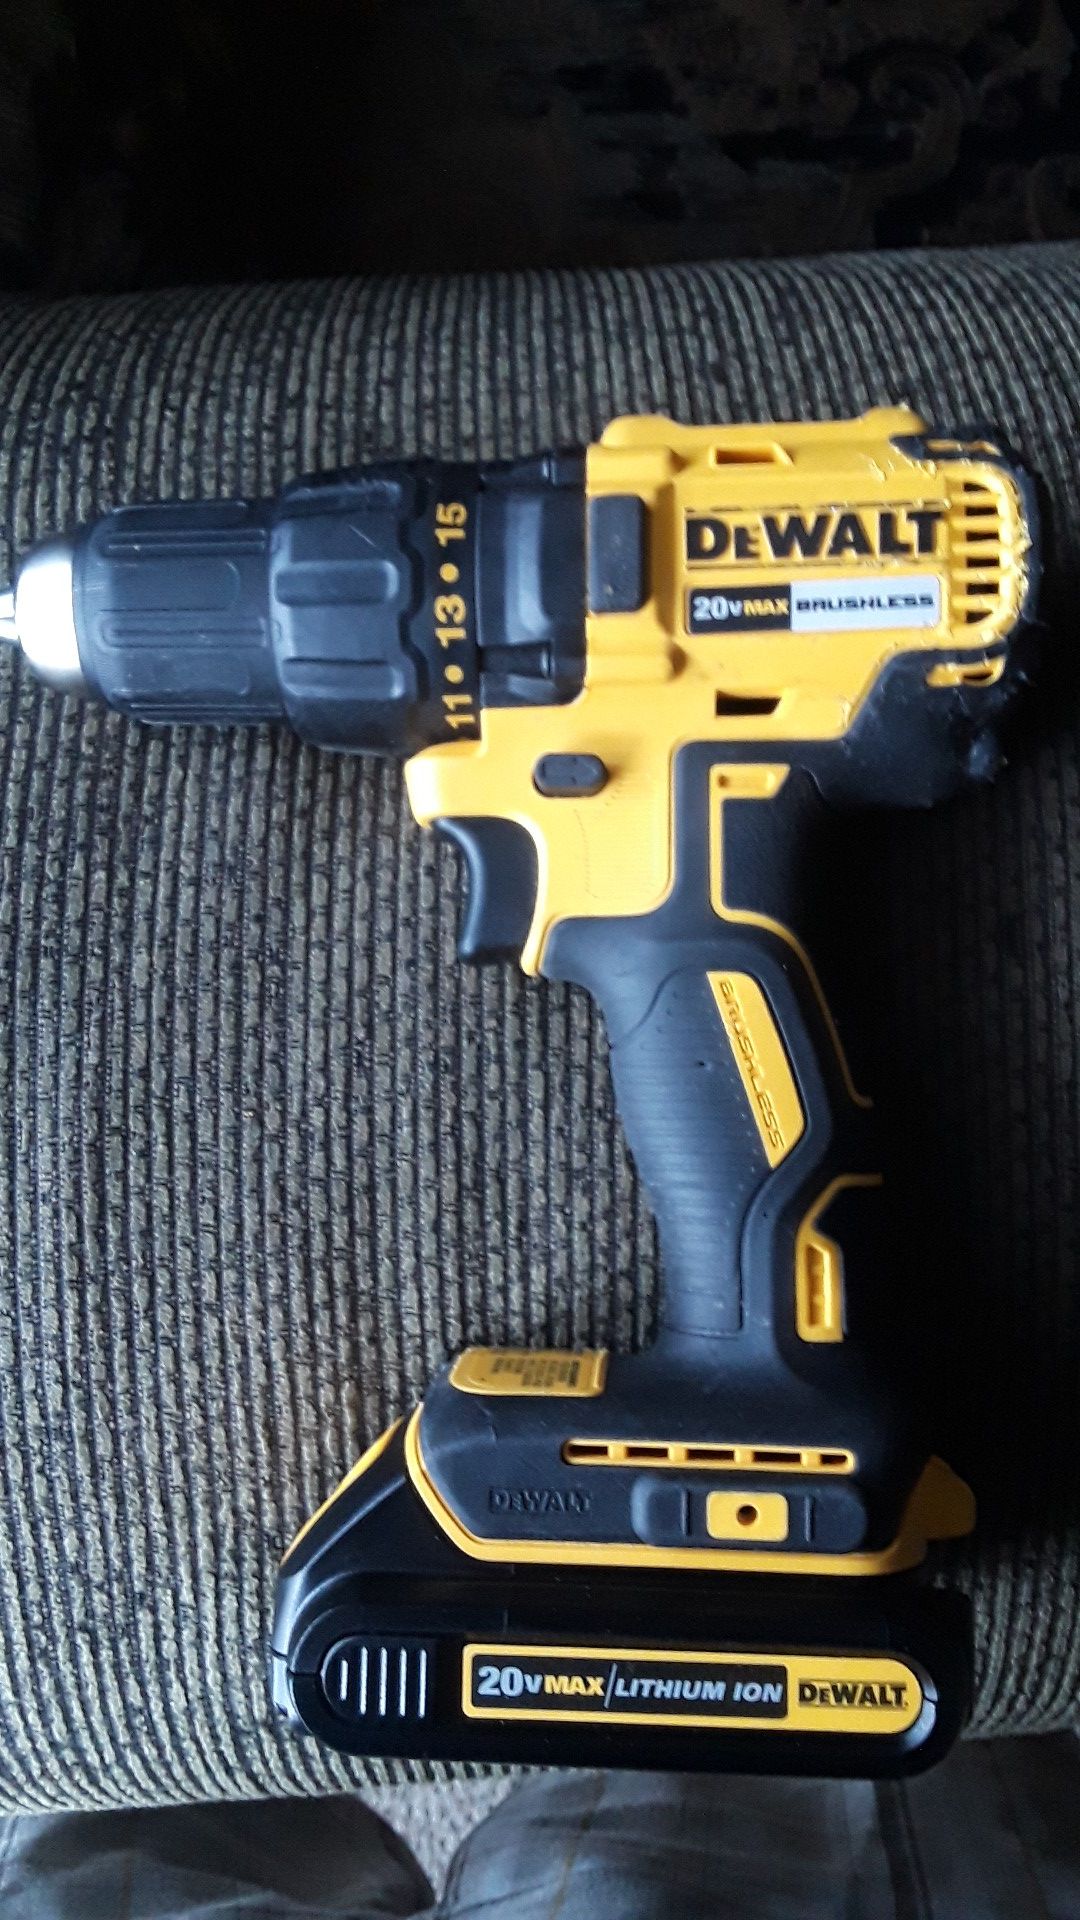 DeWALT 20v max drill and battery. 2 speed